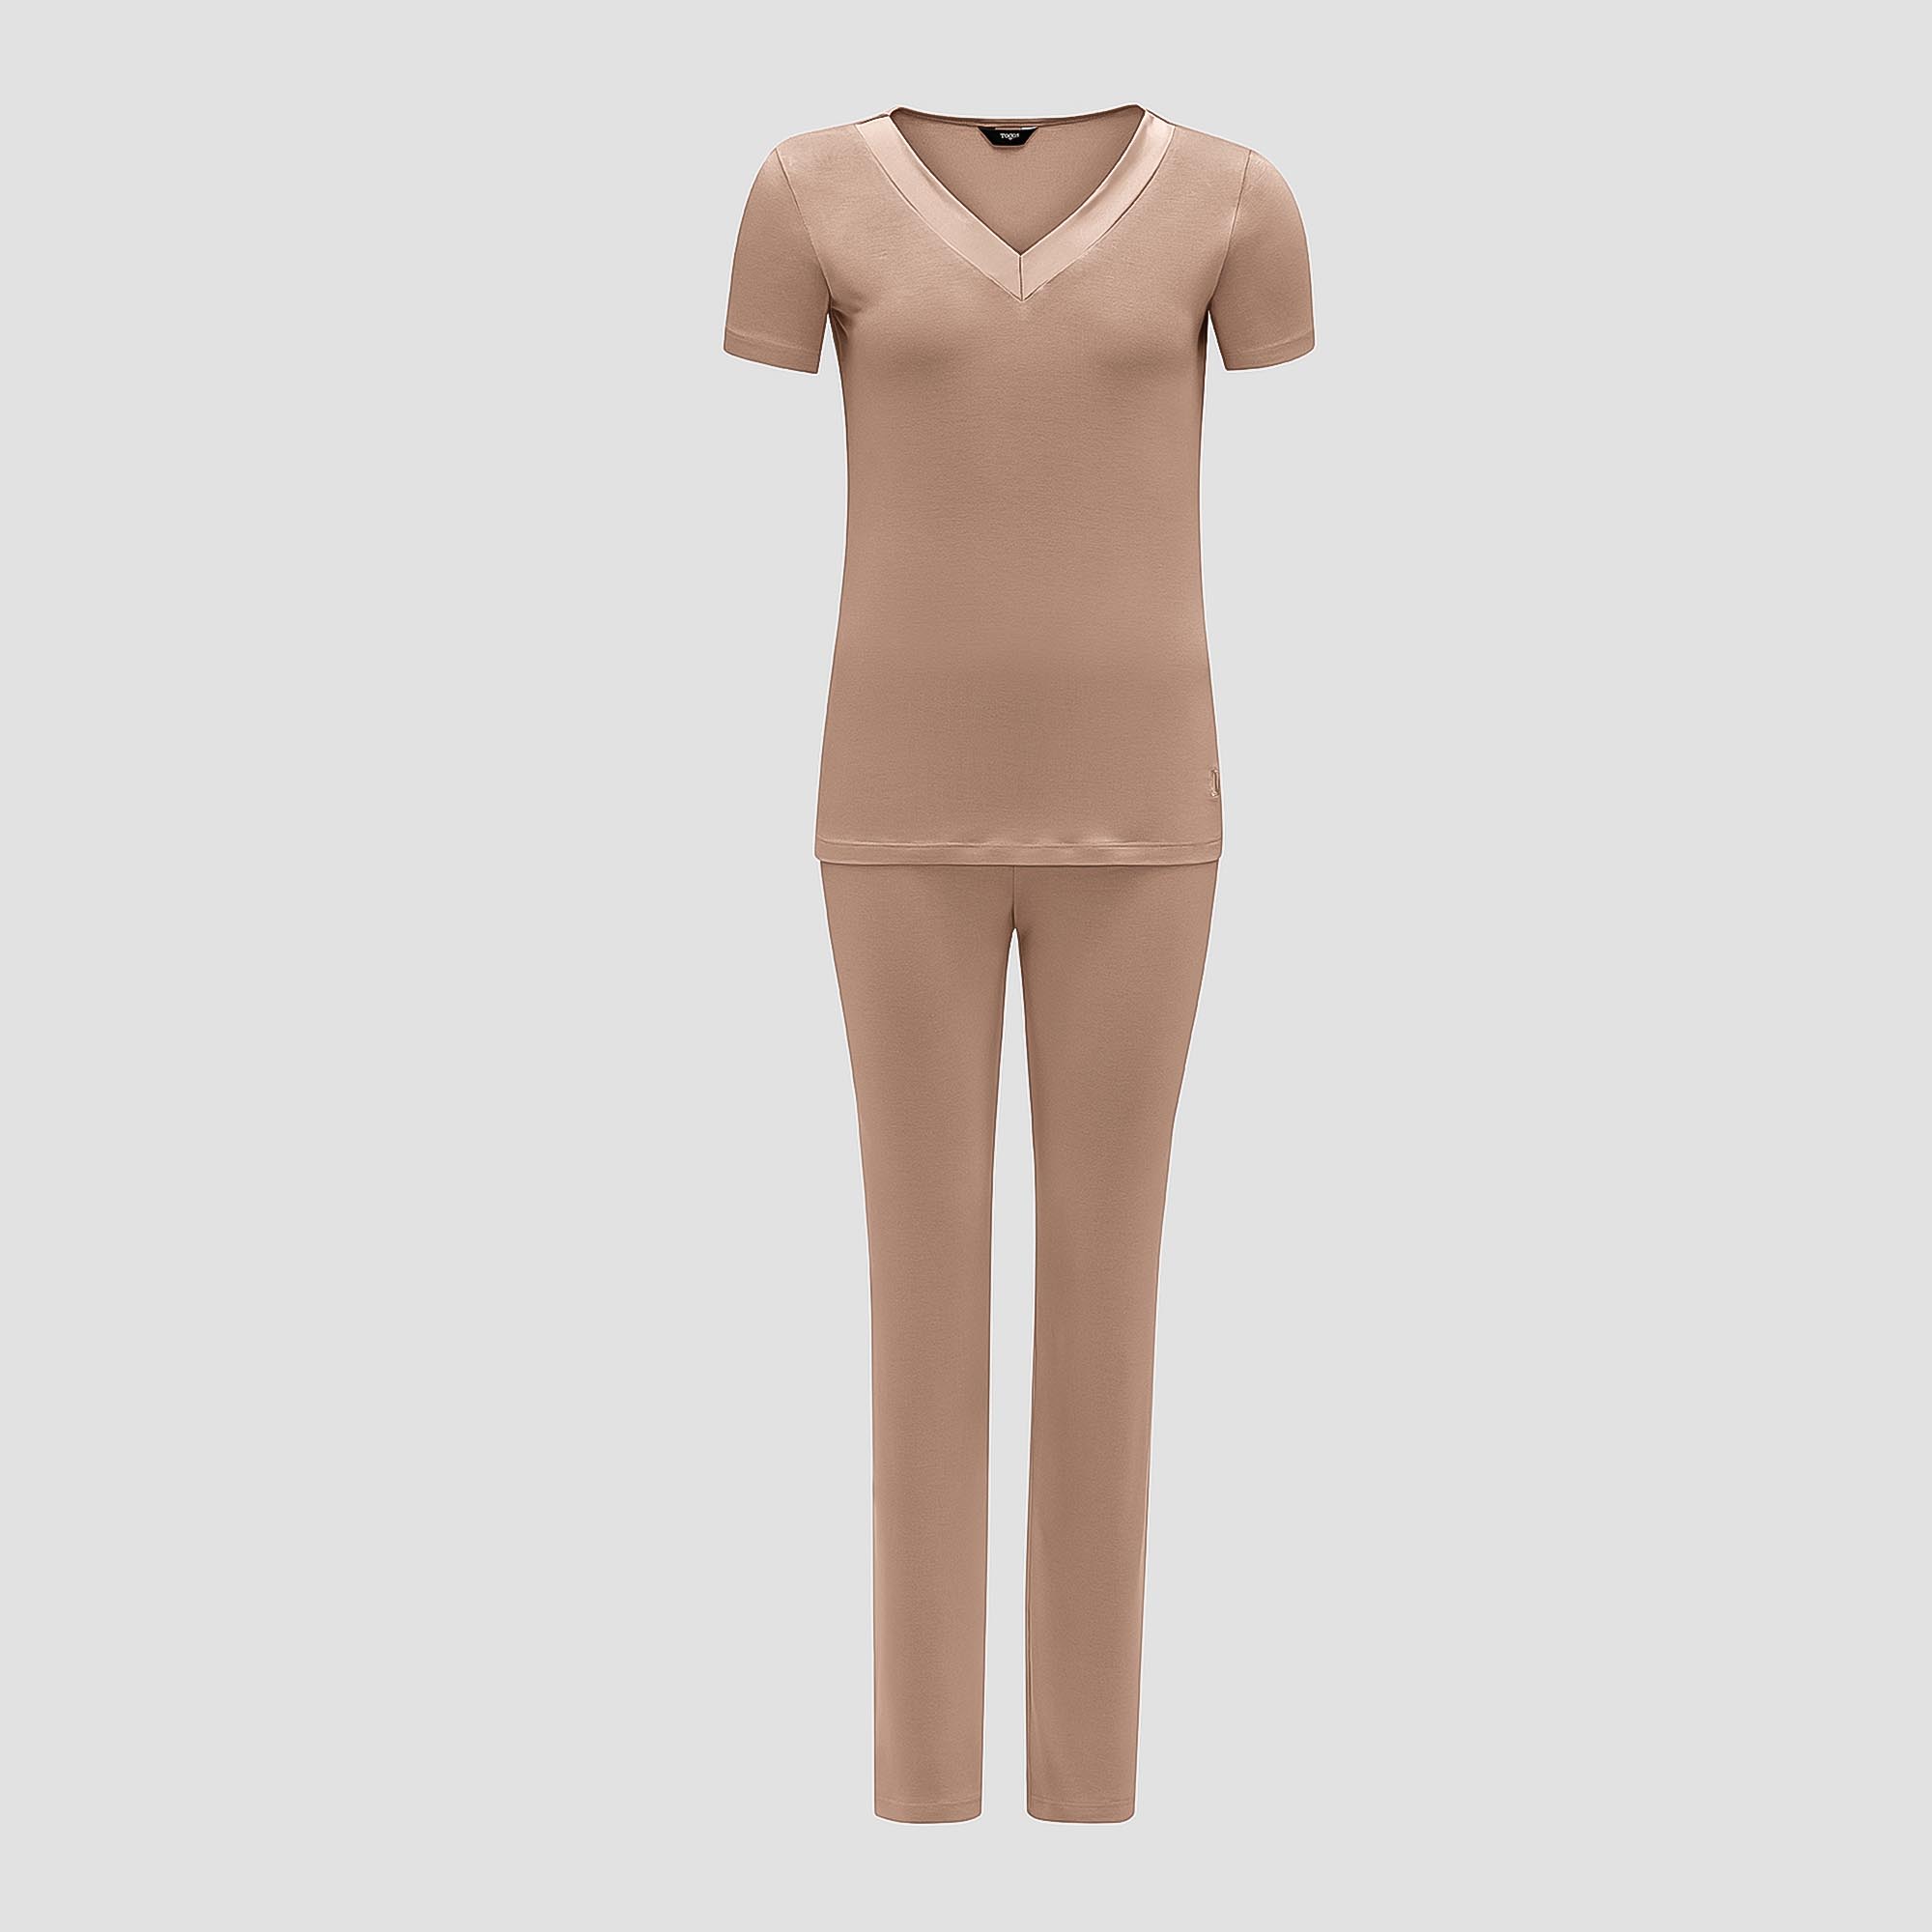 Пижама Togas Ингелла розово-бежевая женская M(46) 2 предмета